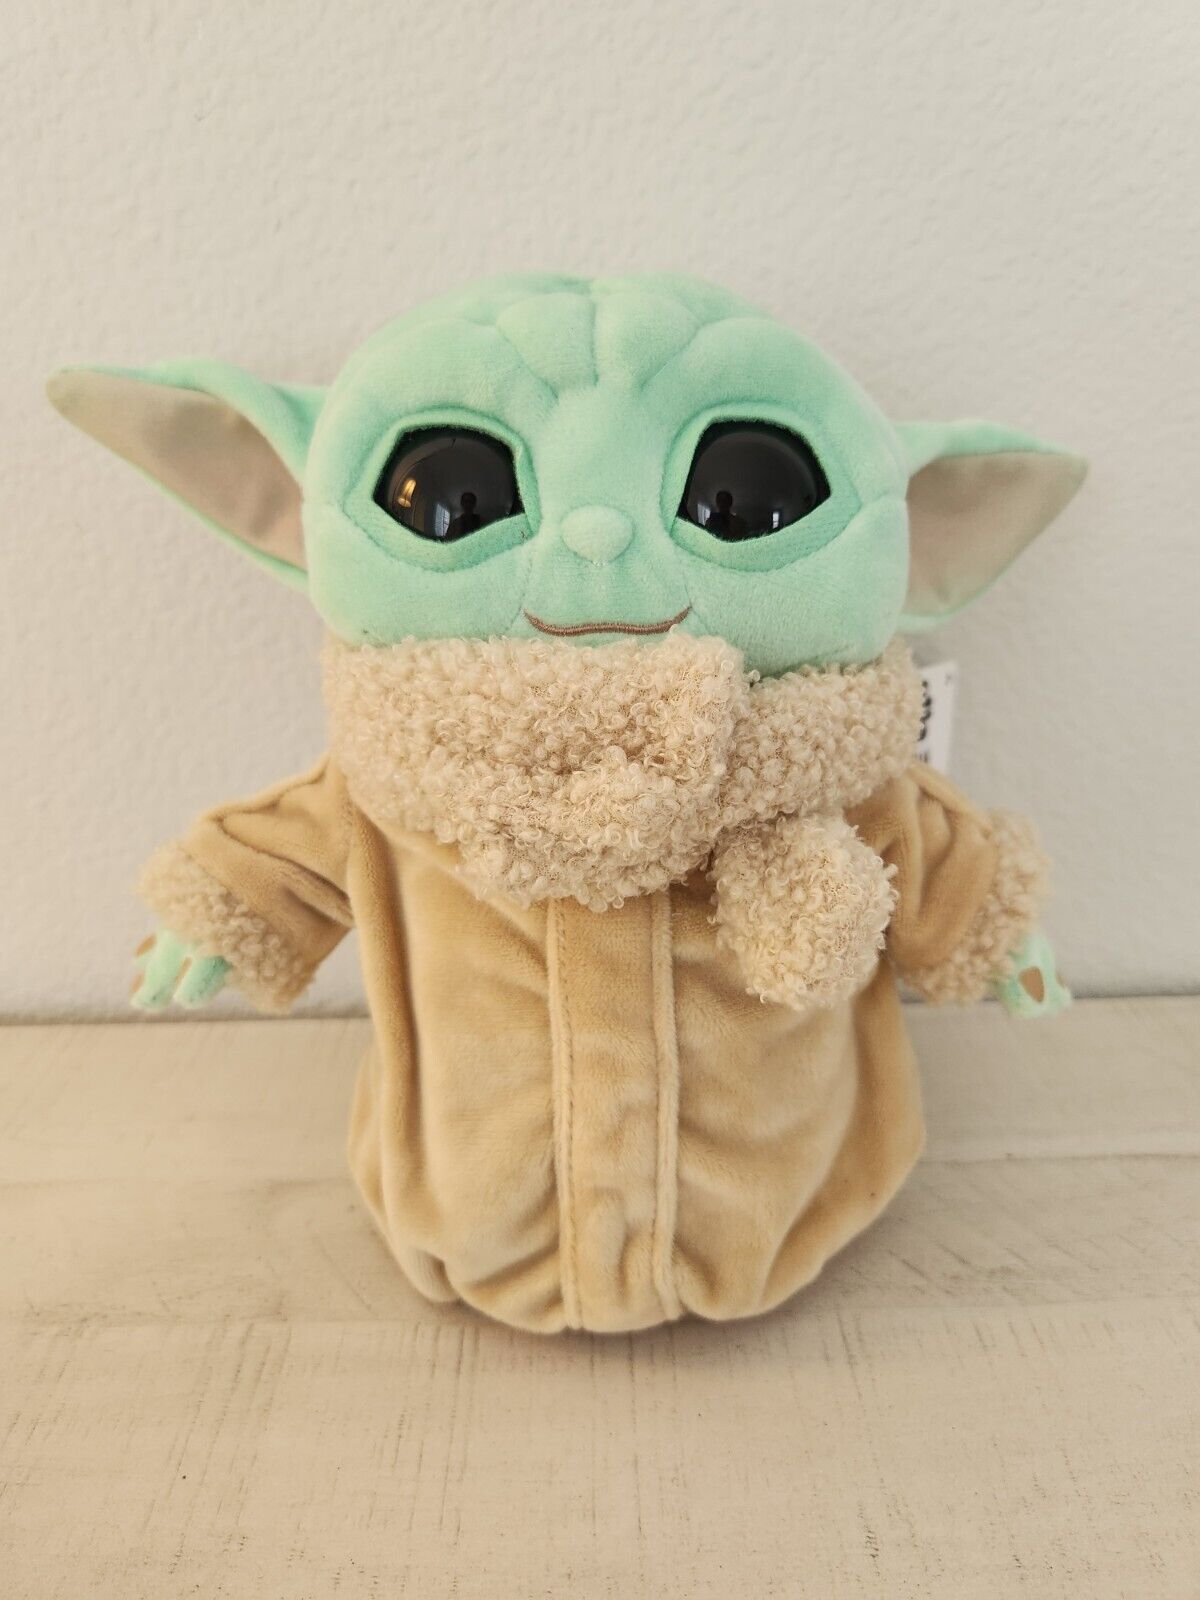 Disney Star Wars Baby Yoda Grogu Mandalorian Plush Toy Mattel Stuffed Animal